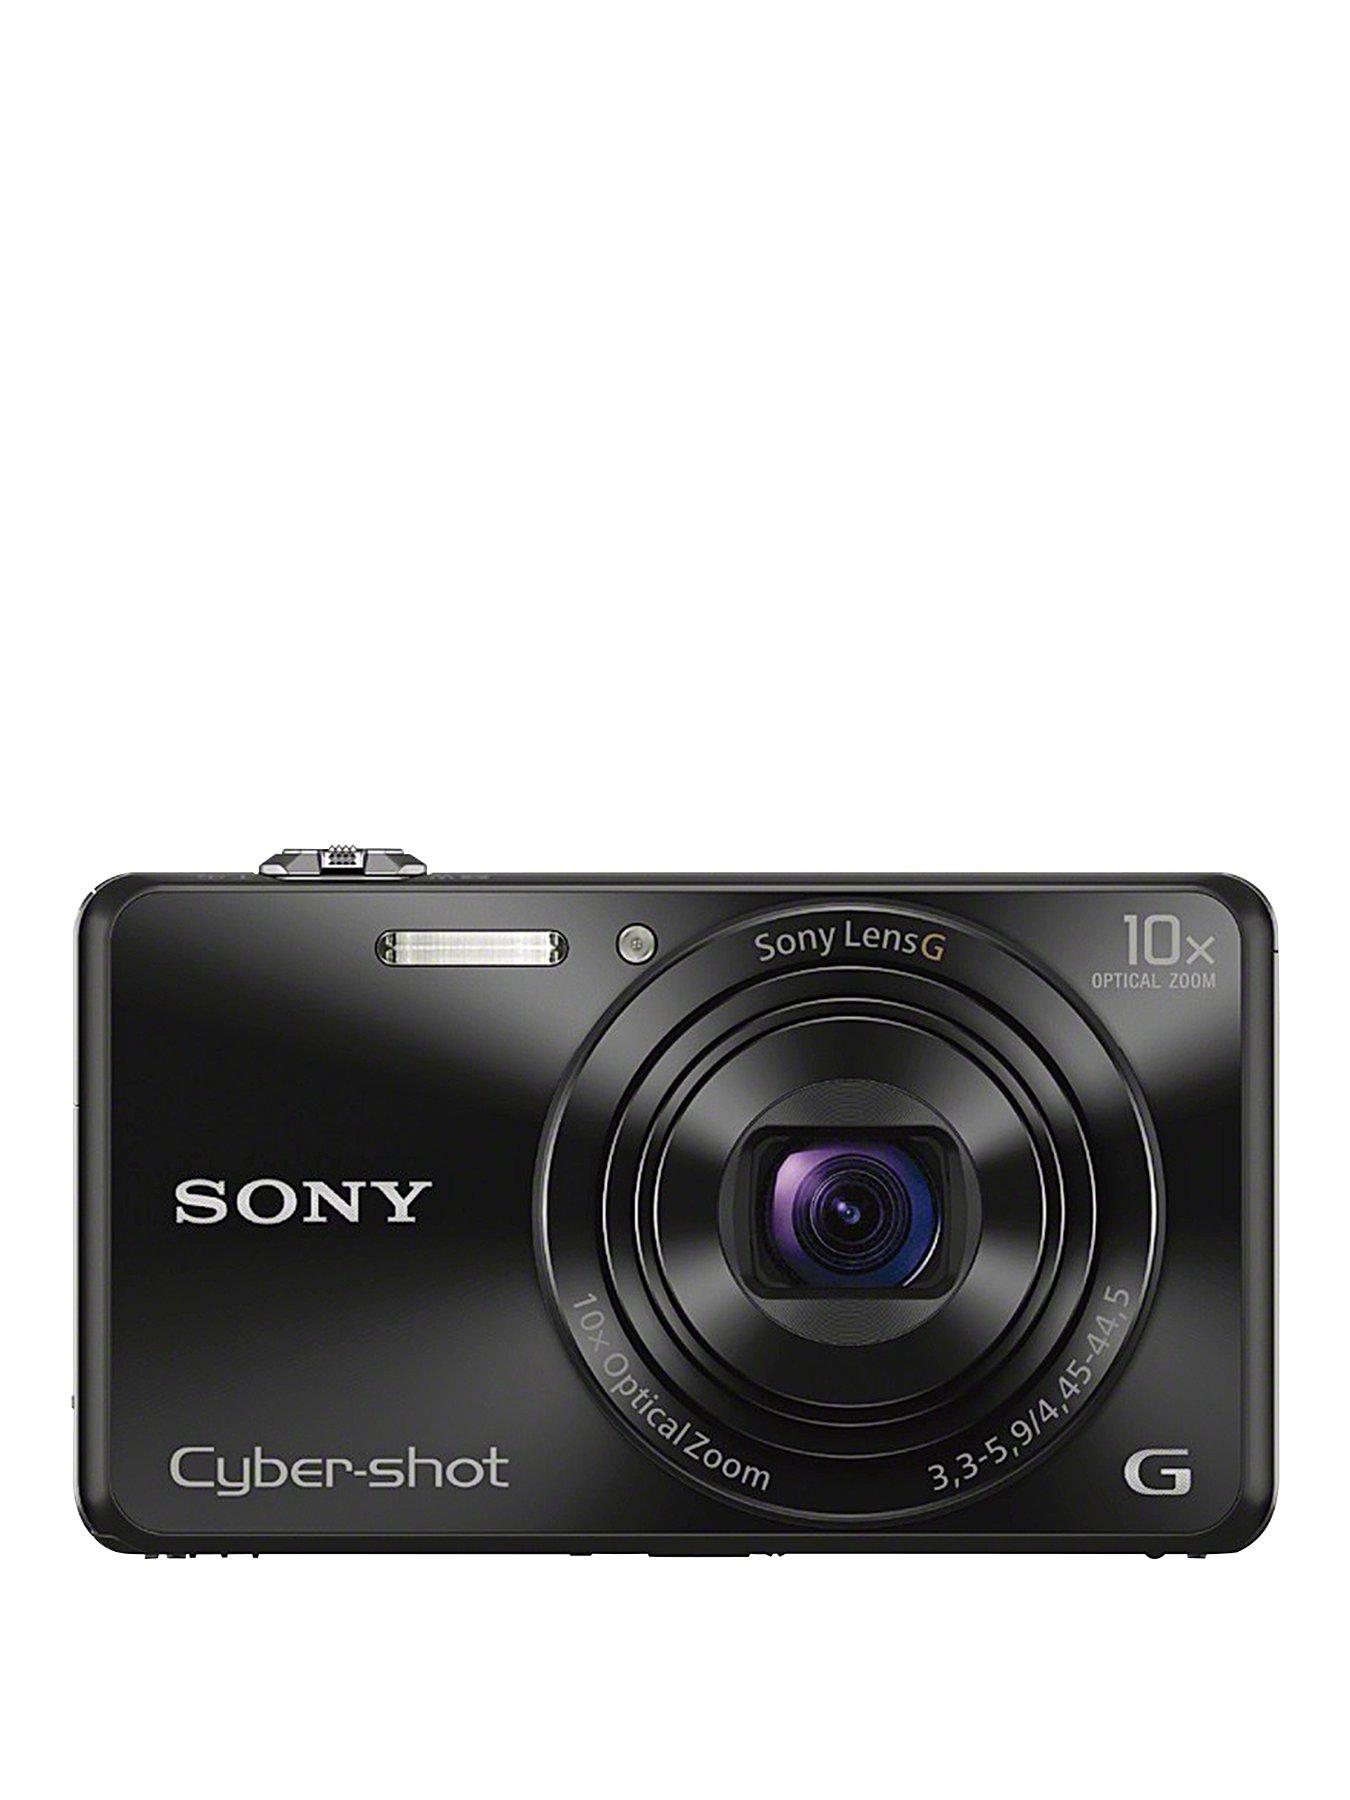 Sony Dscwx220B 18.2 Megapixel Cyber-Shot Compact Digital Camera